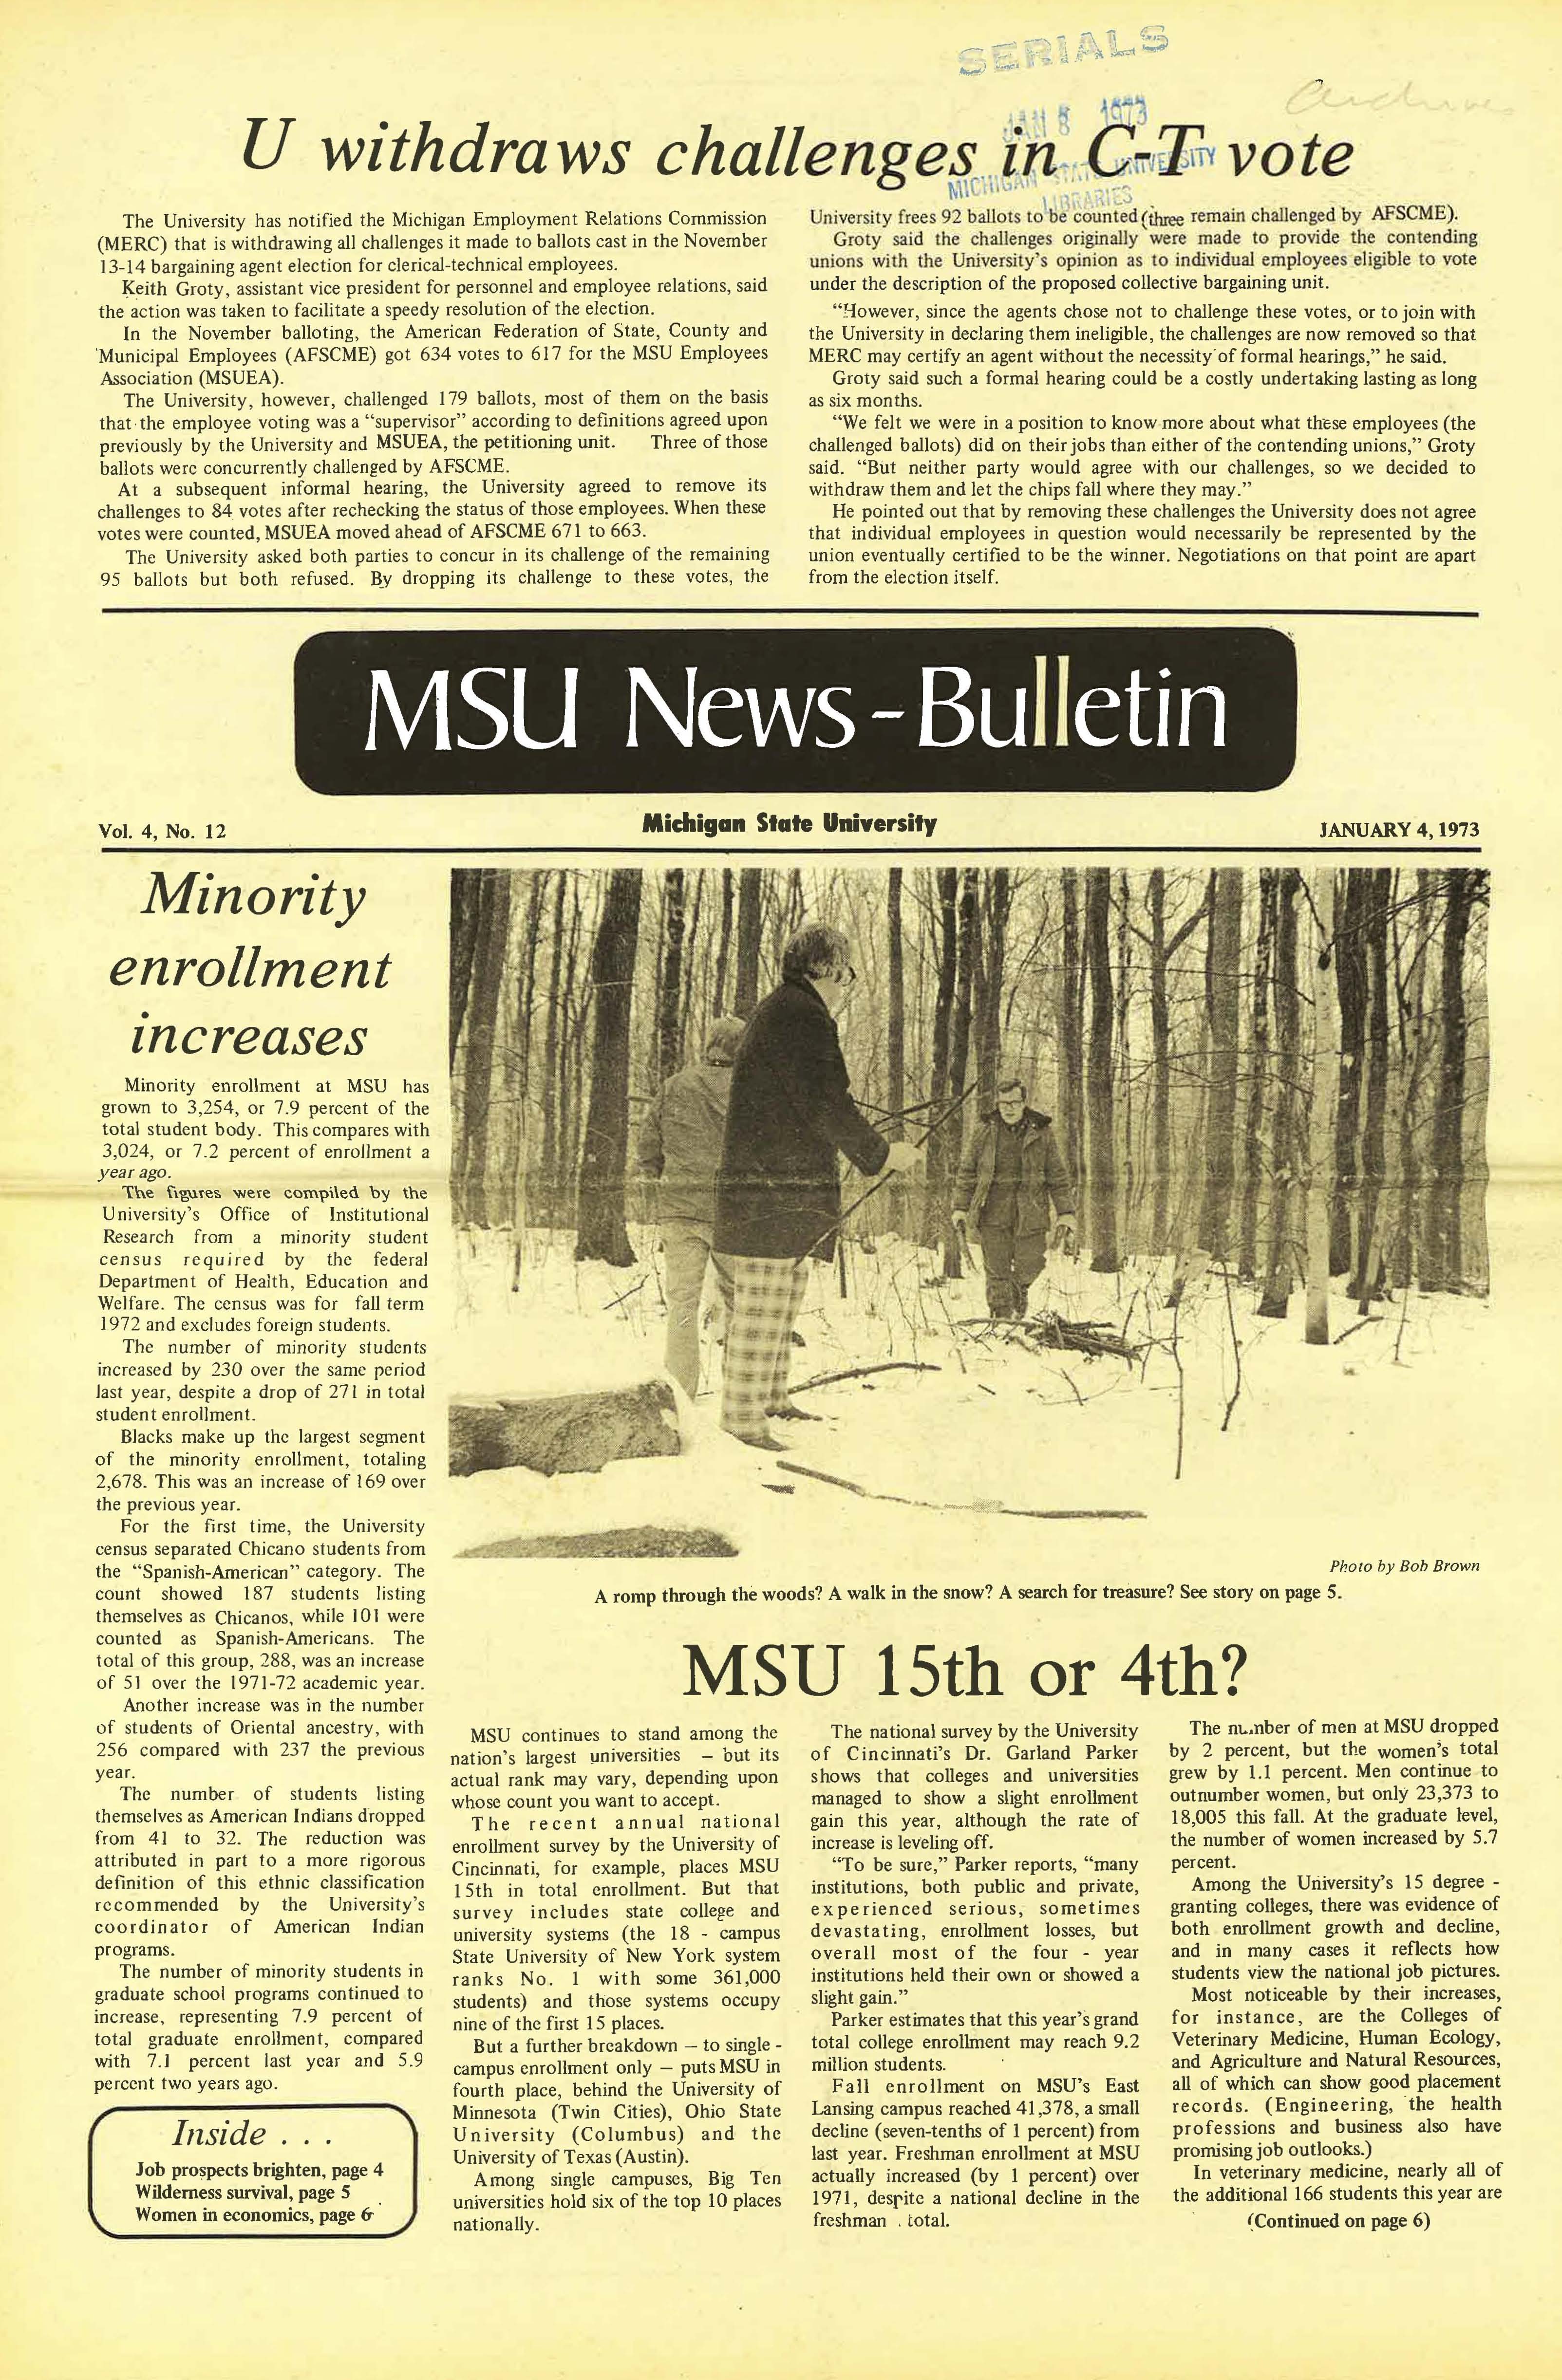 MSU News Bulletin, vol. 4, No. 14, January 18, 1973